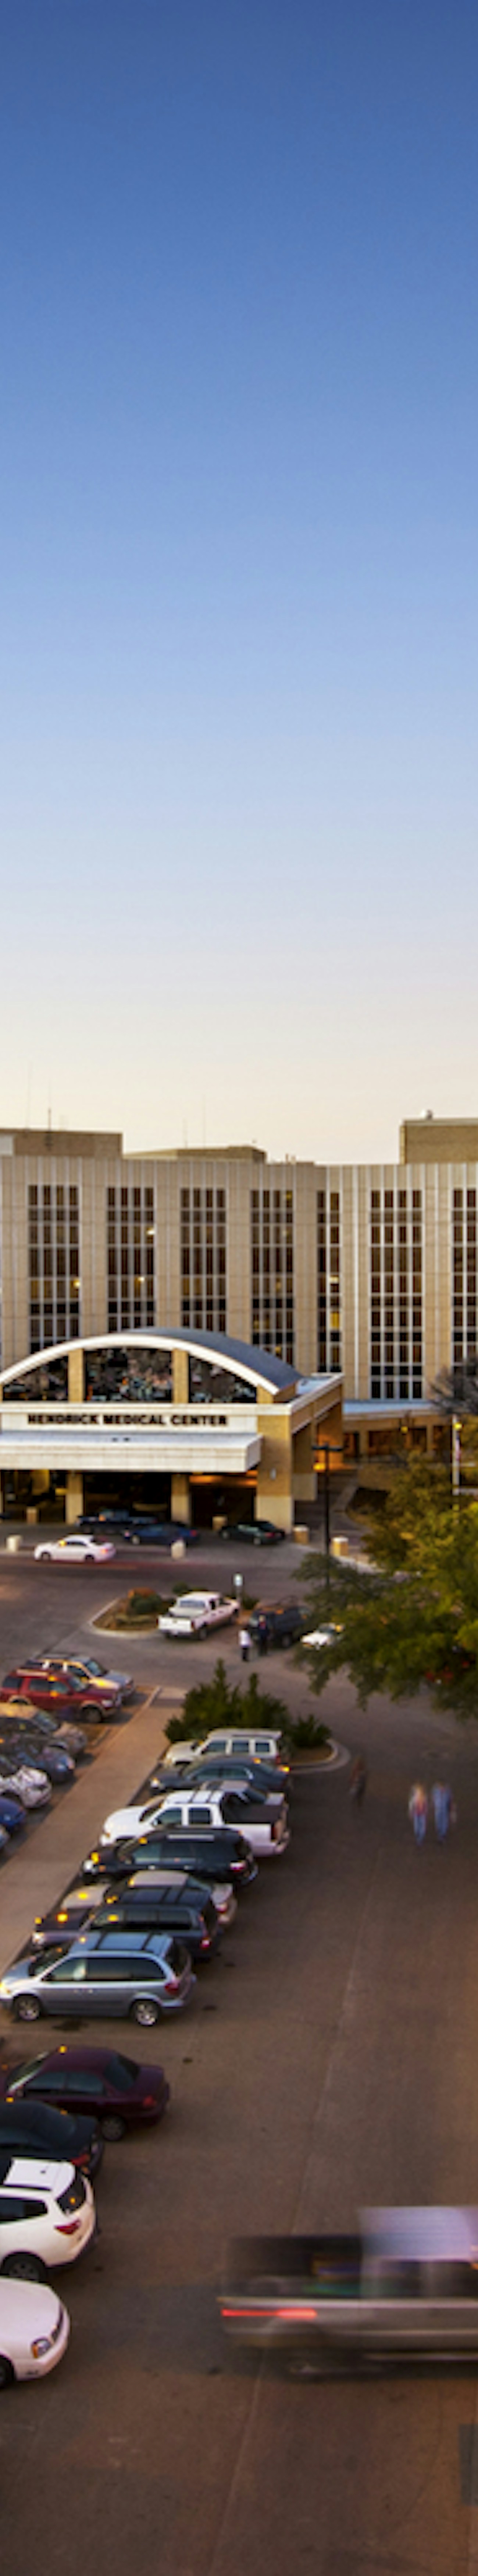                         Hendrick Medical Center Project 2010
                    